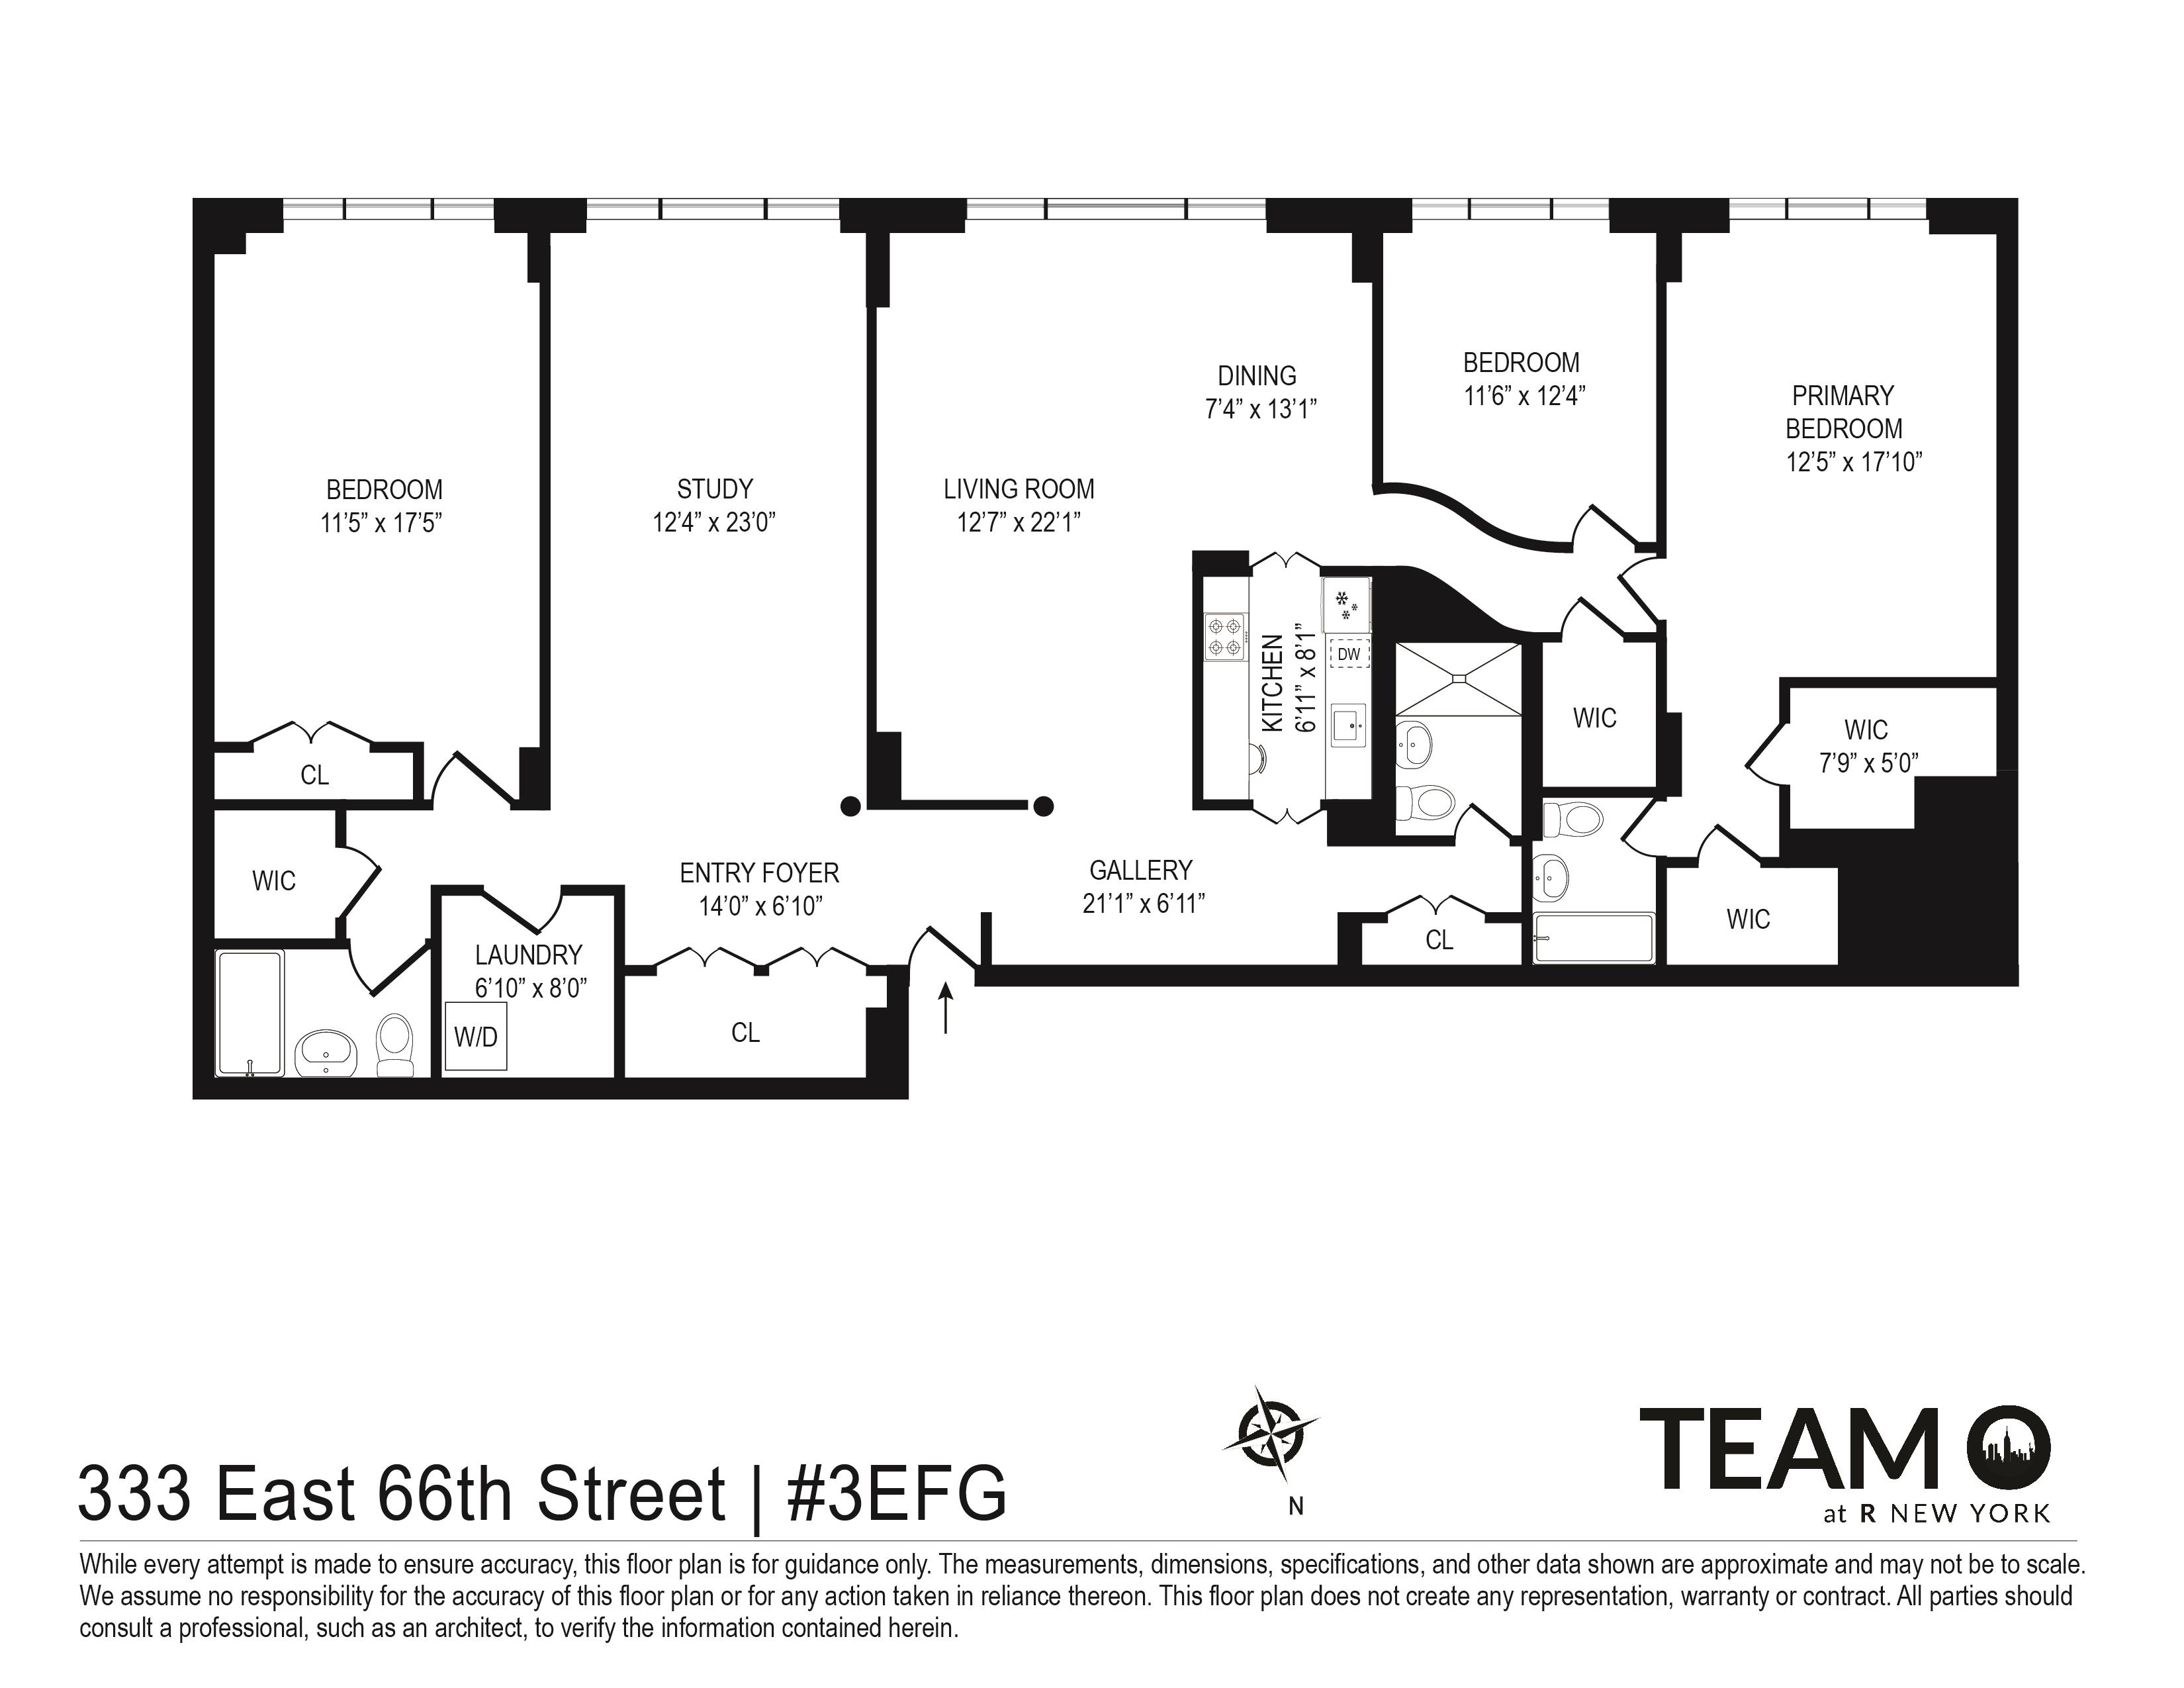 Floorplan for 333 East 66th Street, 3-EFG